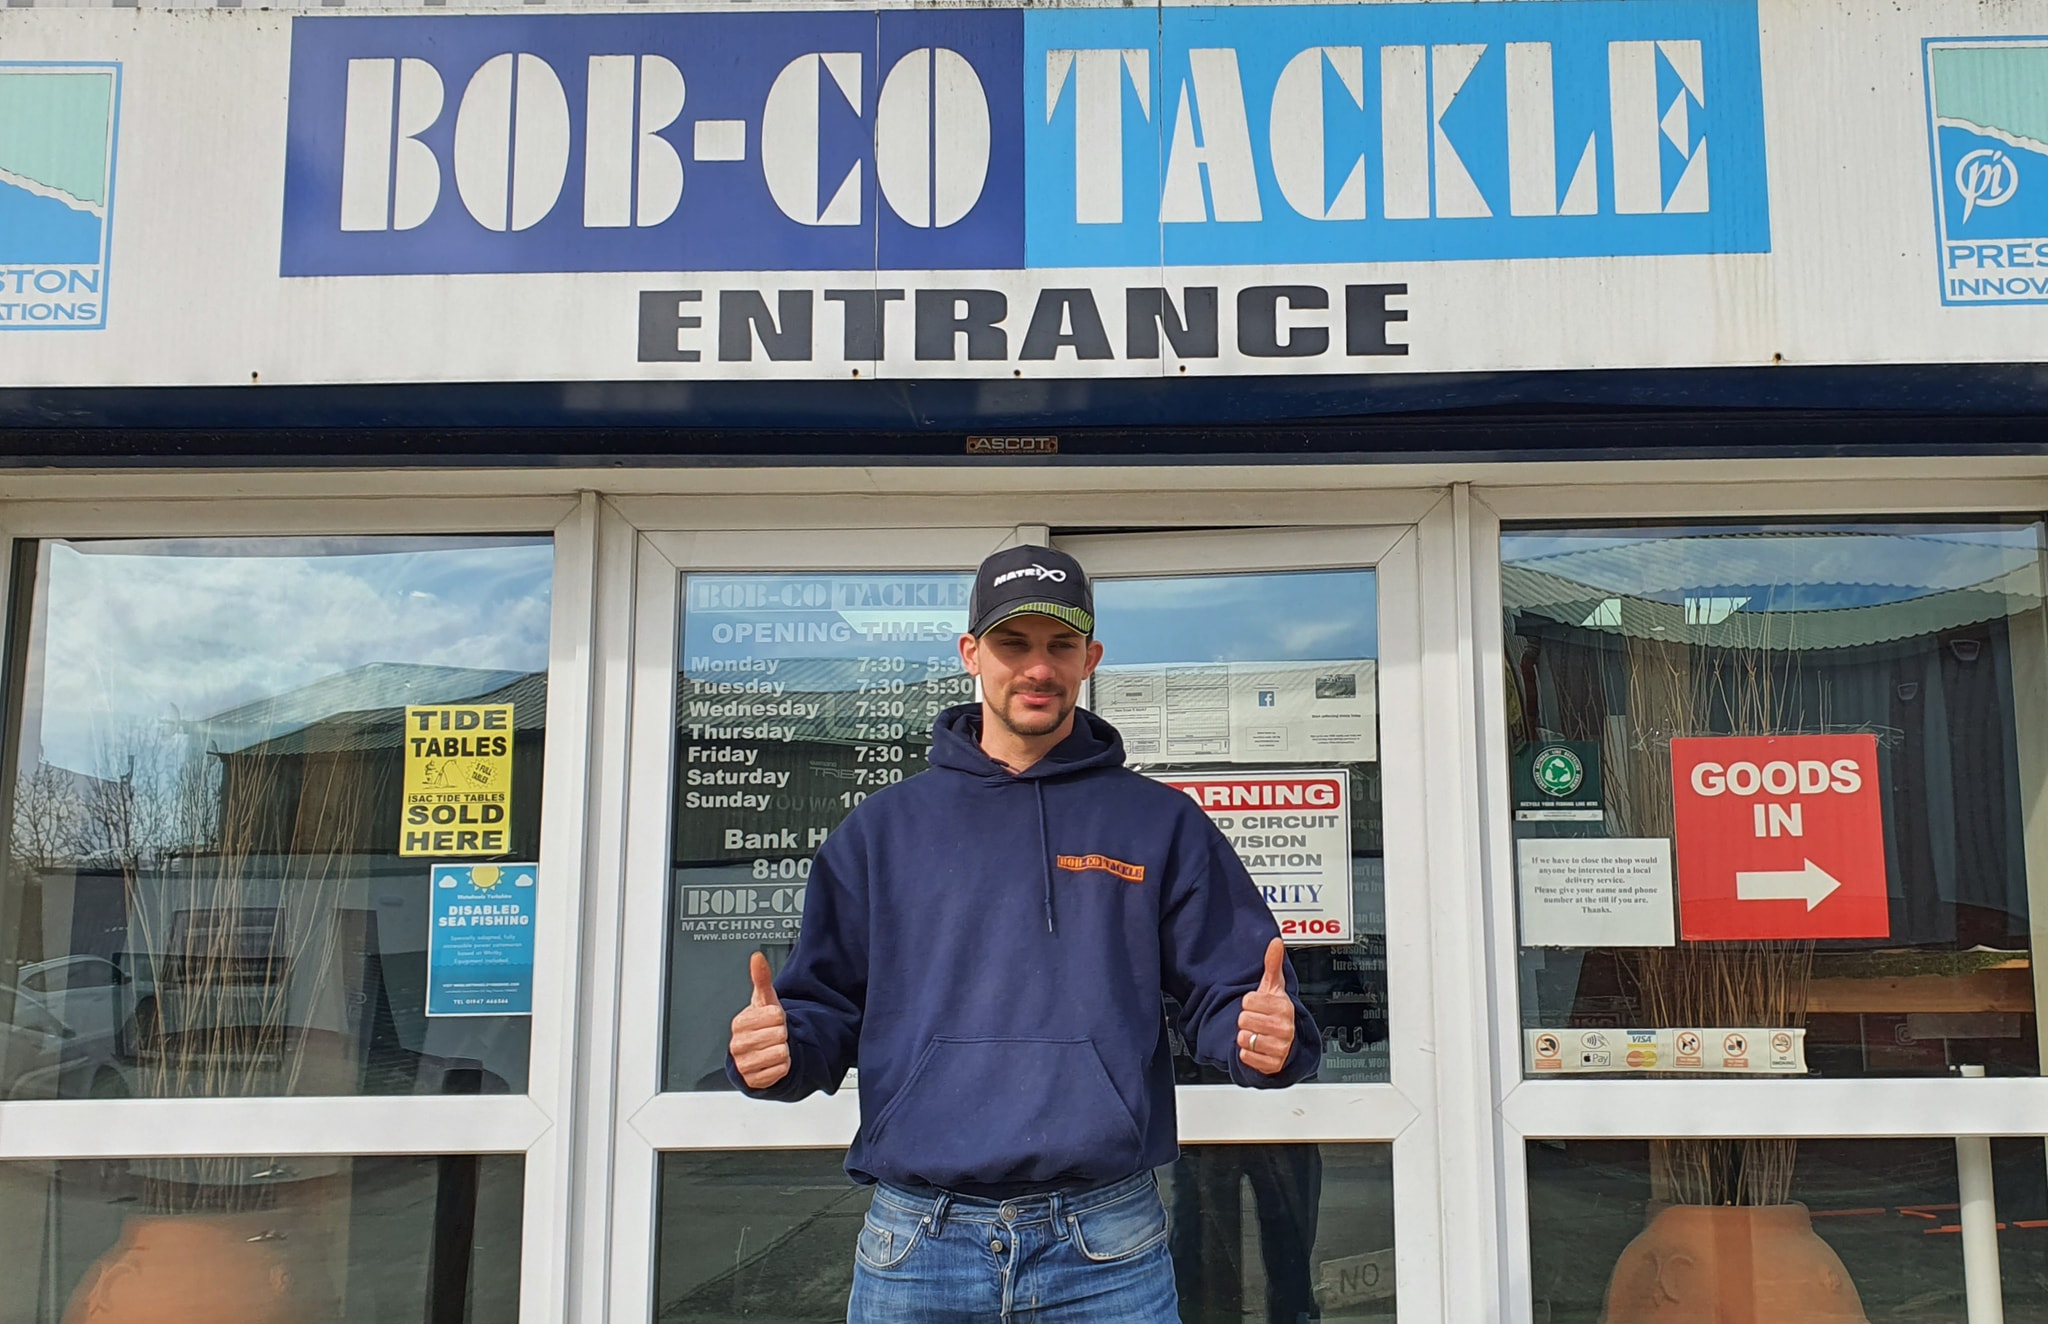 Bob-Co Tackle Fishing Tackle LTD